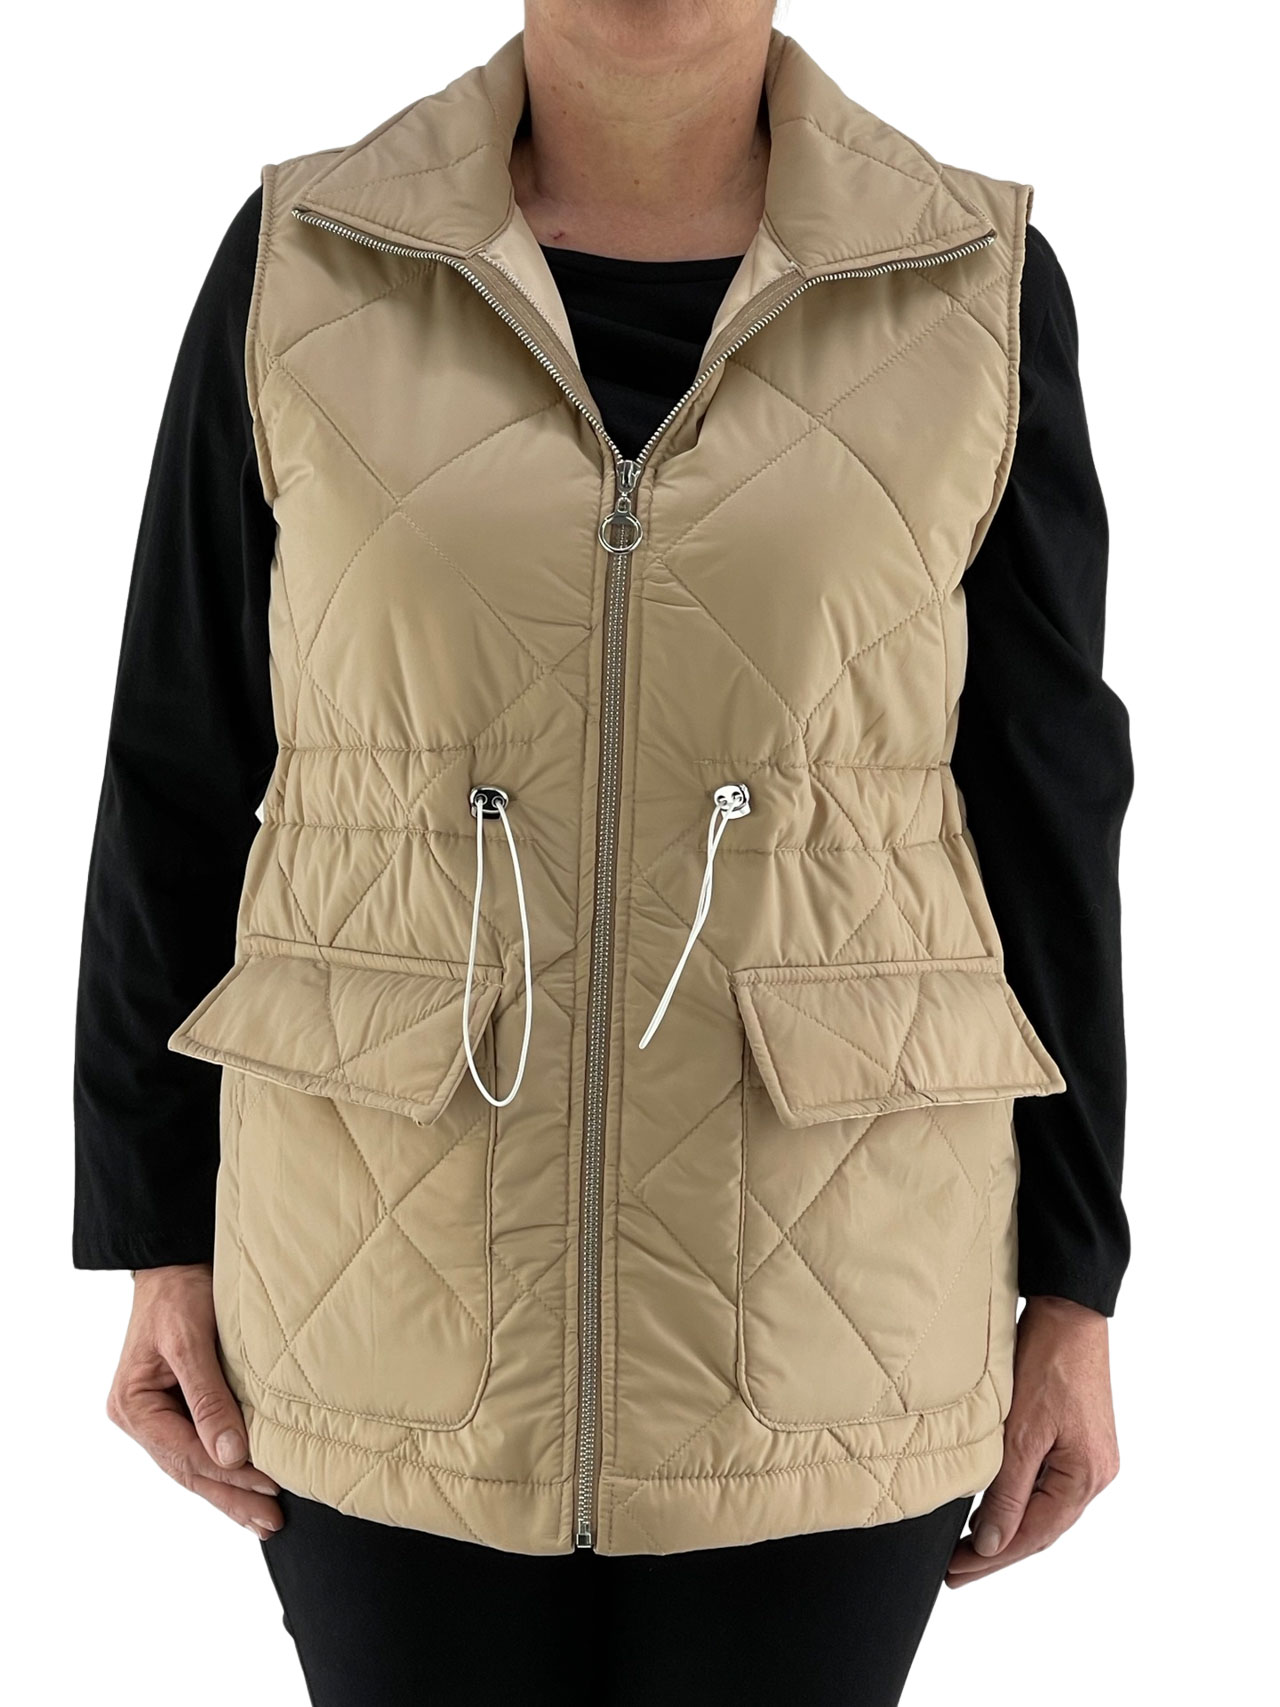 Sleeveless jacket female with front pockets code 20065